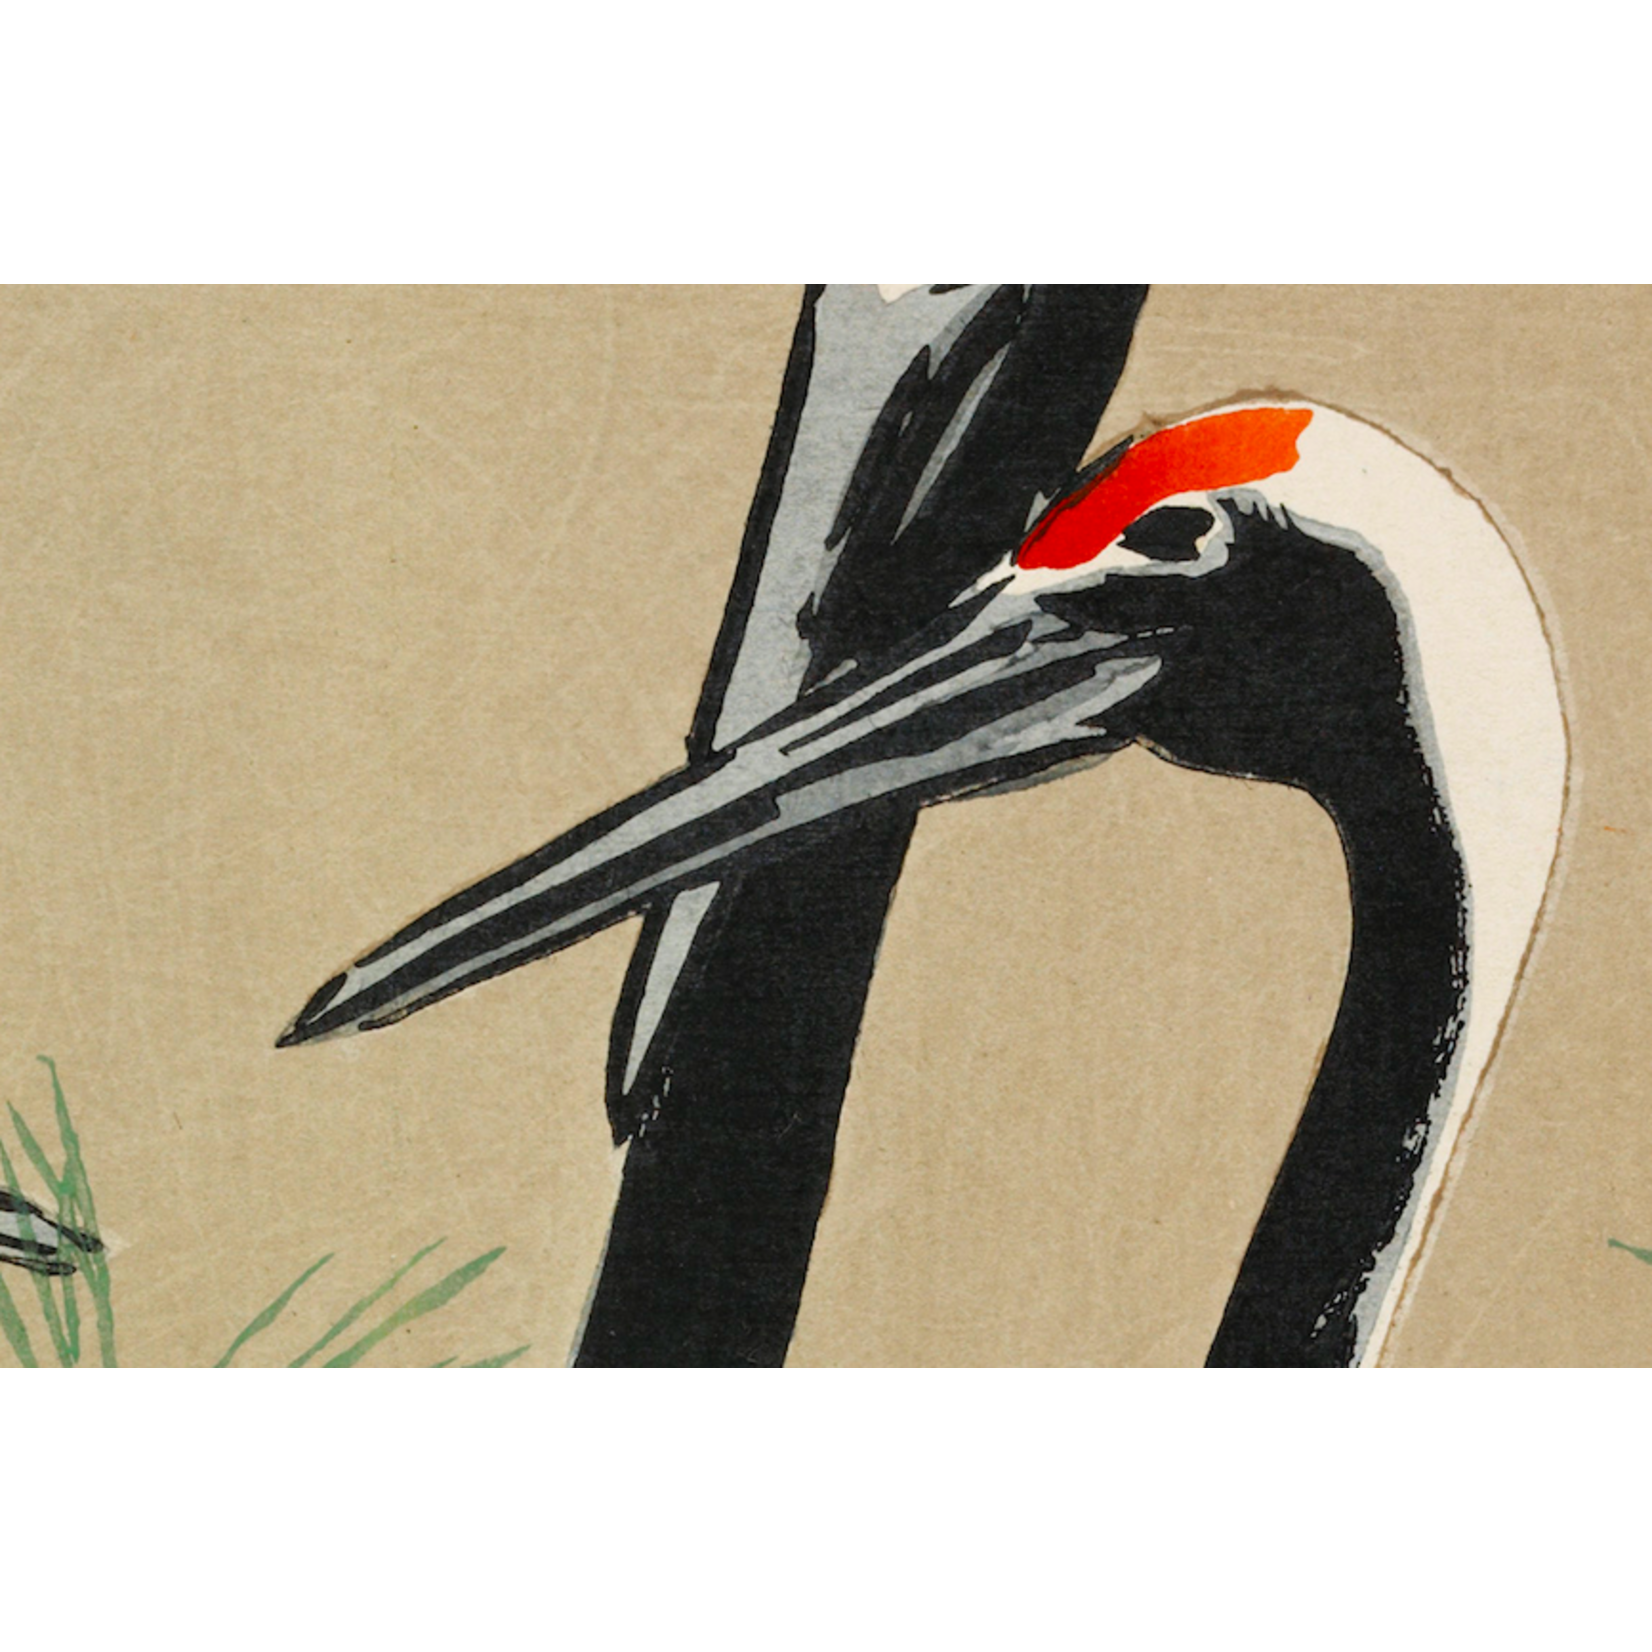 Framed Print on Rag Paper: Cranes from Momoyogusa by Kamisaka Sekka